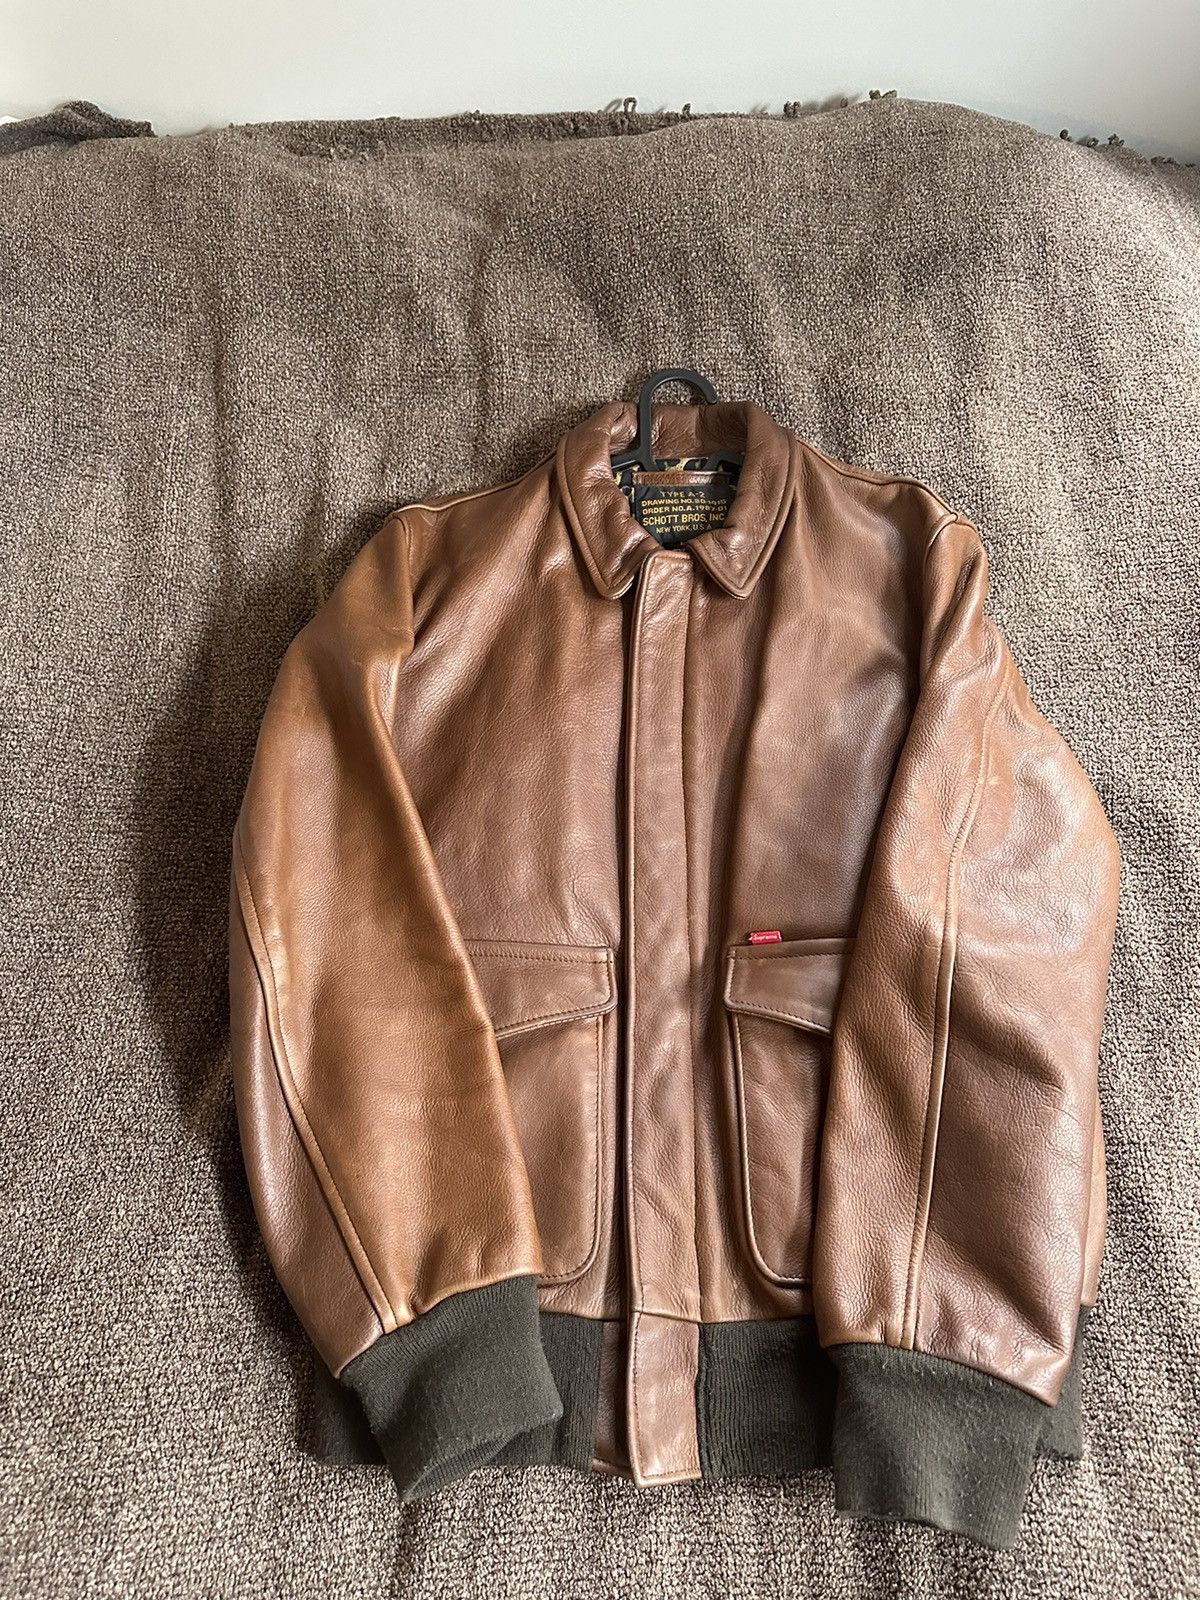 Supreme Supreme x Schott Leopard Lined Leather Jacket | Grailed